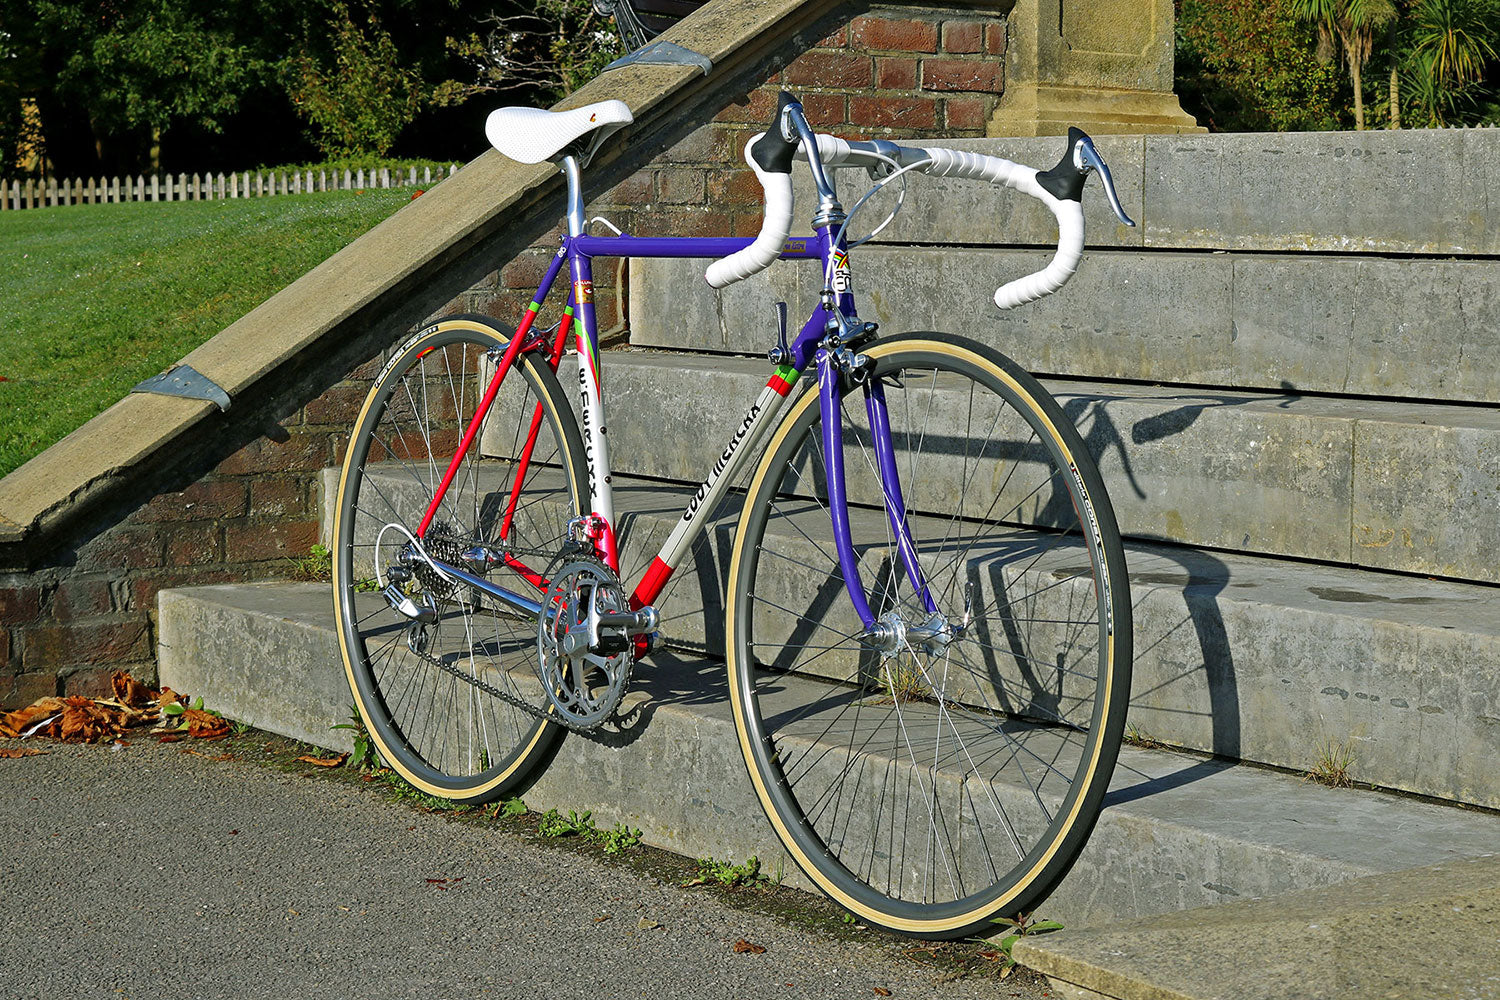 Part 2: Finishing the Eddy Merckx steel bicycle build